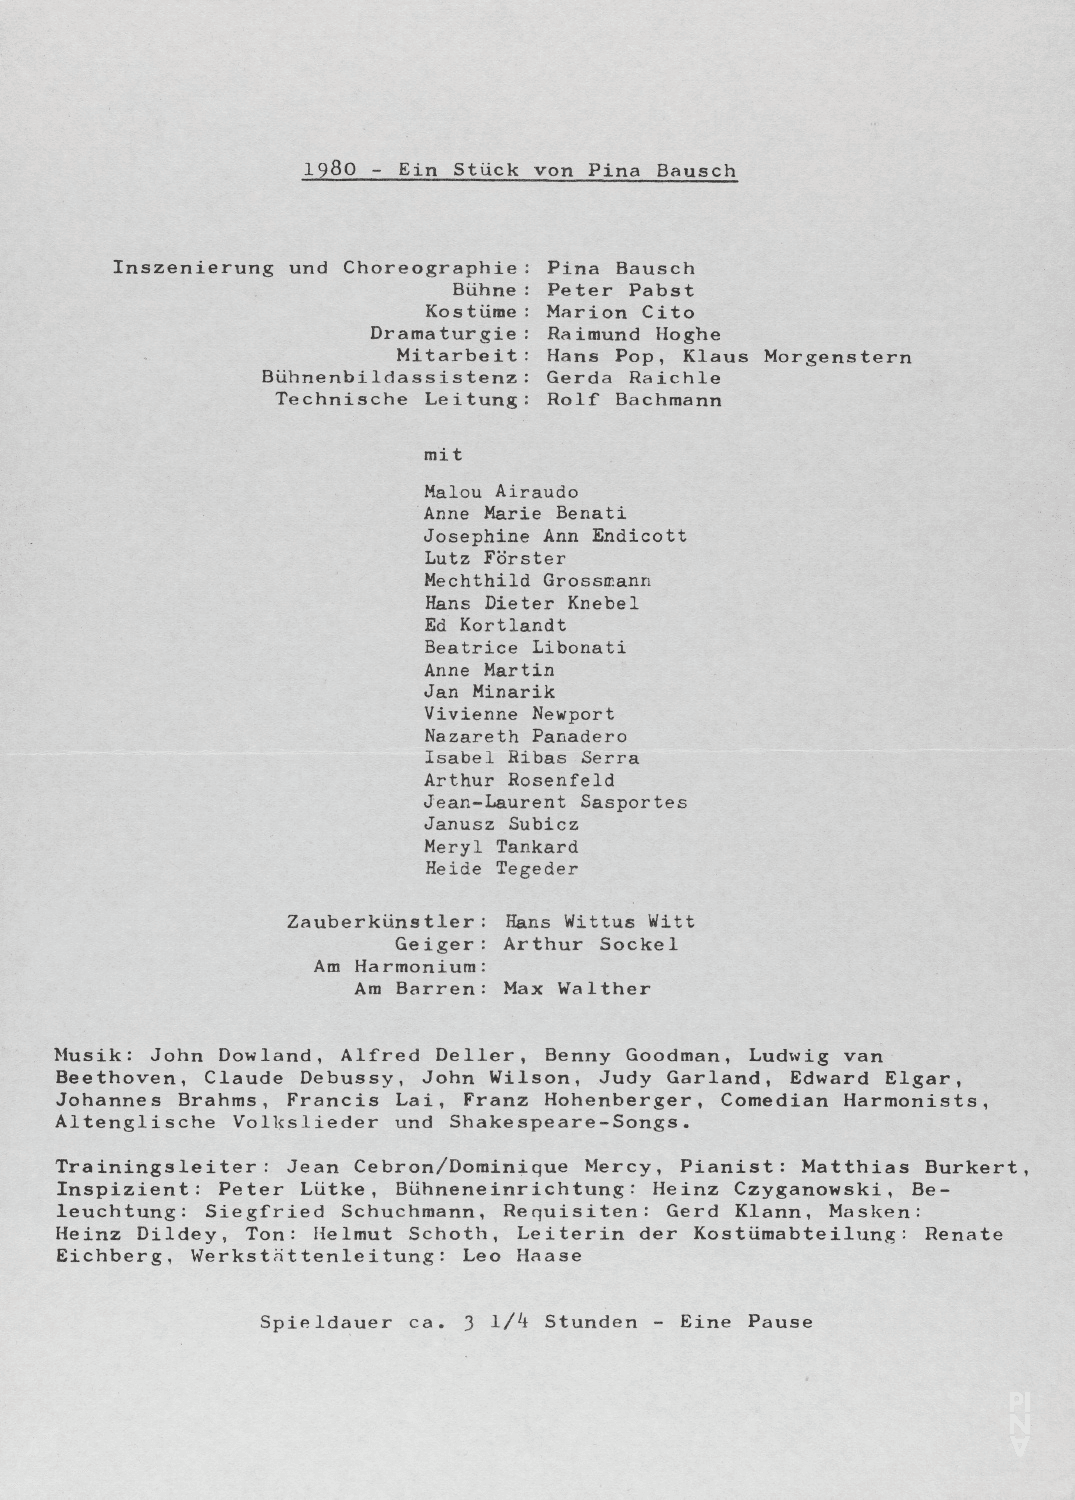 Programme pour « 1980 – Une pièce de Pina Bausch » de Pina Bausch à Wuppertal, saison 1979/80